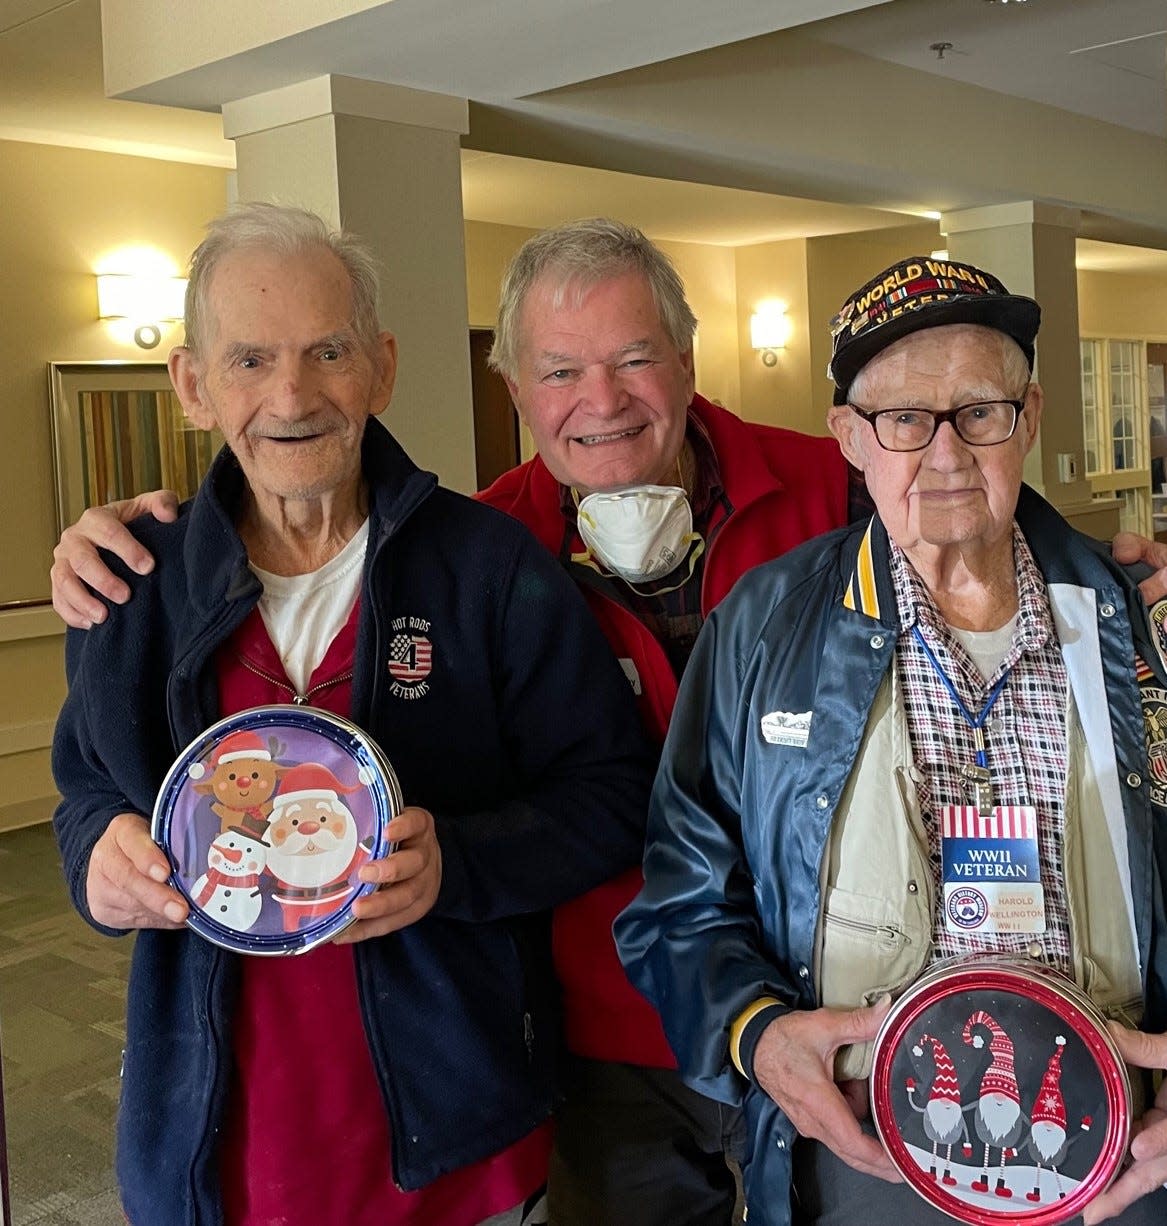 From left to right are World War II veteran Joe Cooper and museum volunteers Mike McCarthy and WWII veteran Harold Wellington.